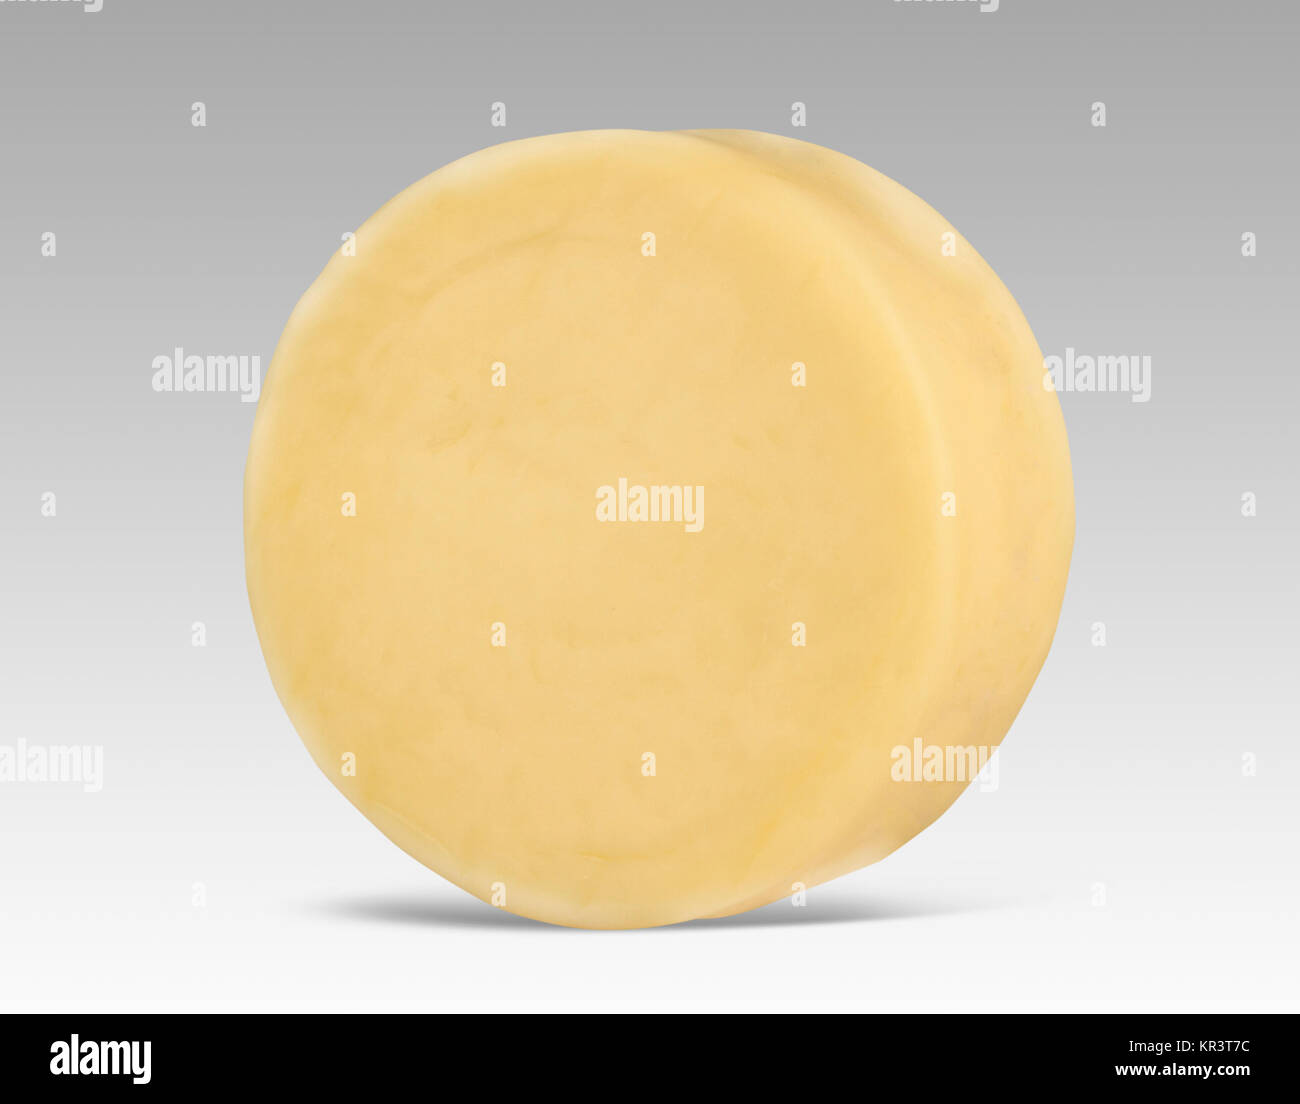 Download Cheese Mockup Stock Photo Alamy